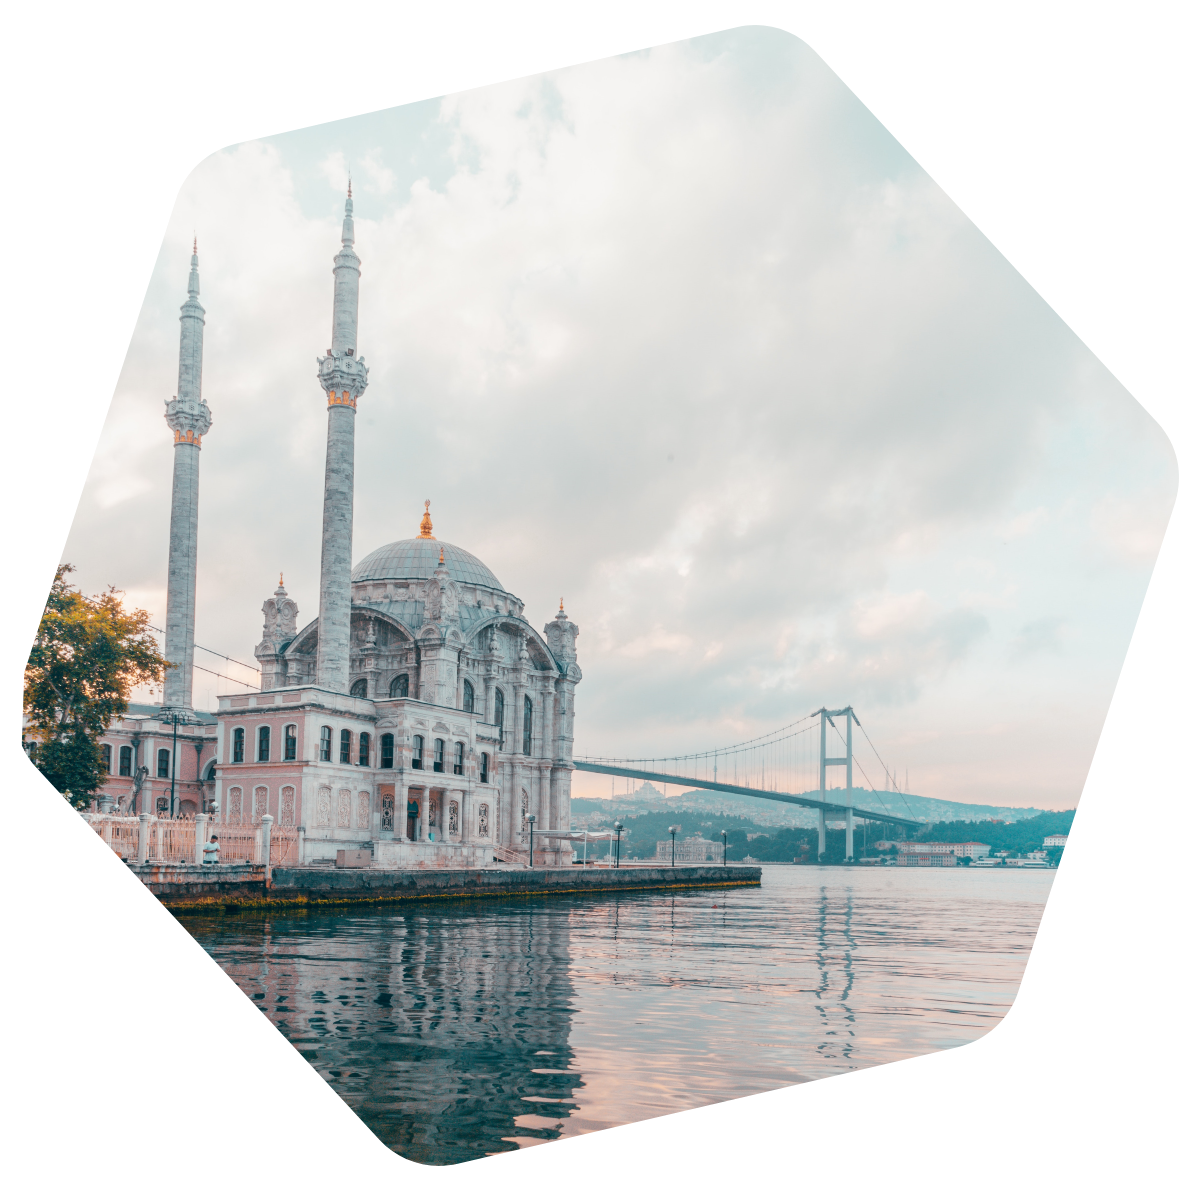 Turkey Mosque near the water